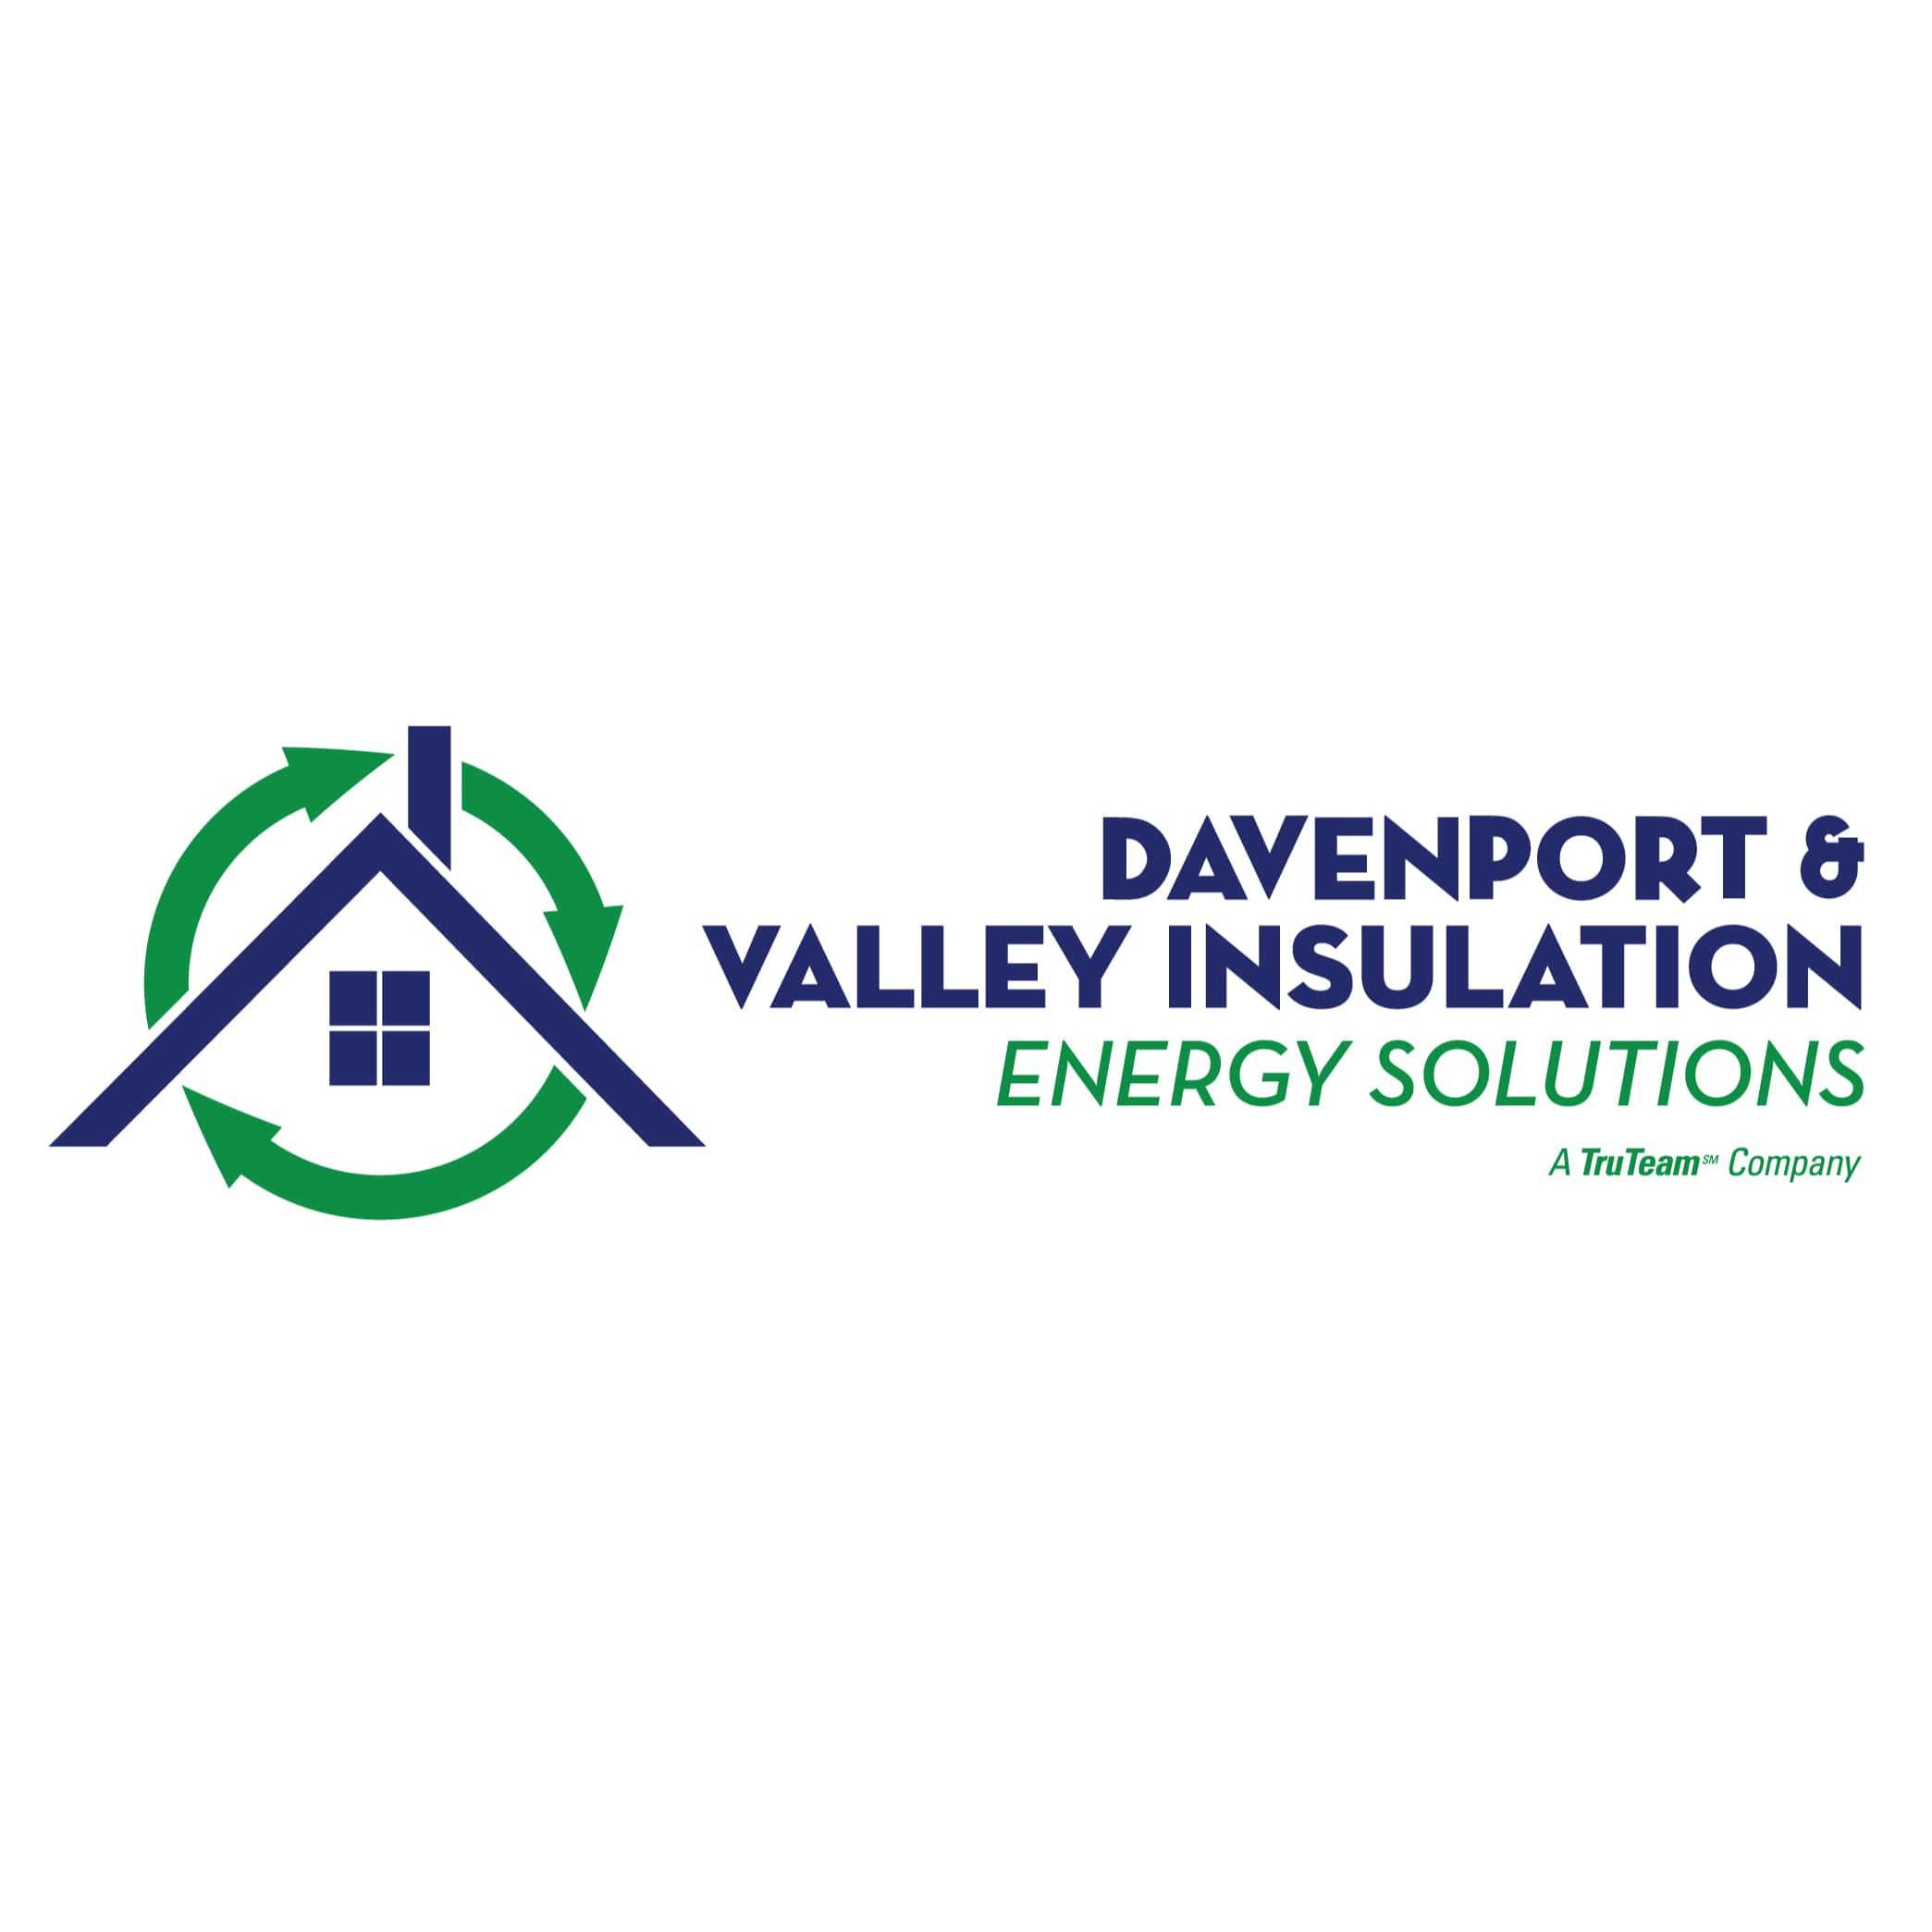 Davenport & Valley Insulation